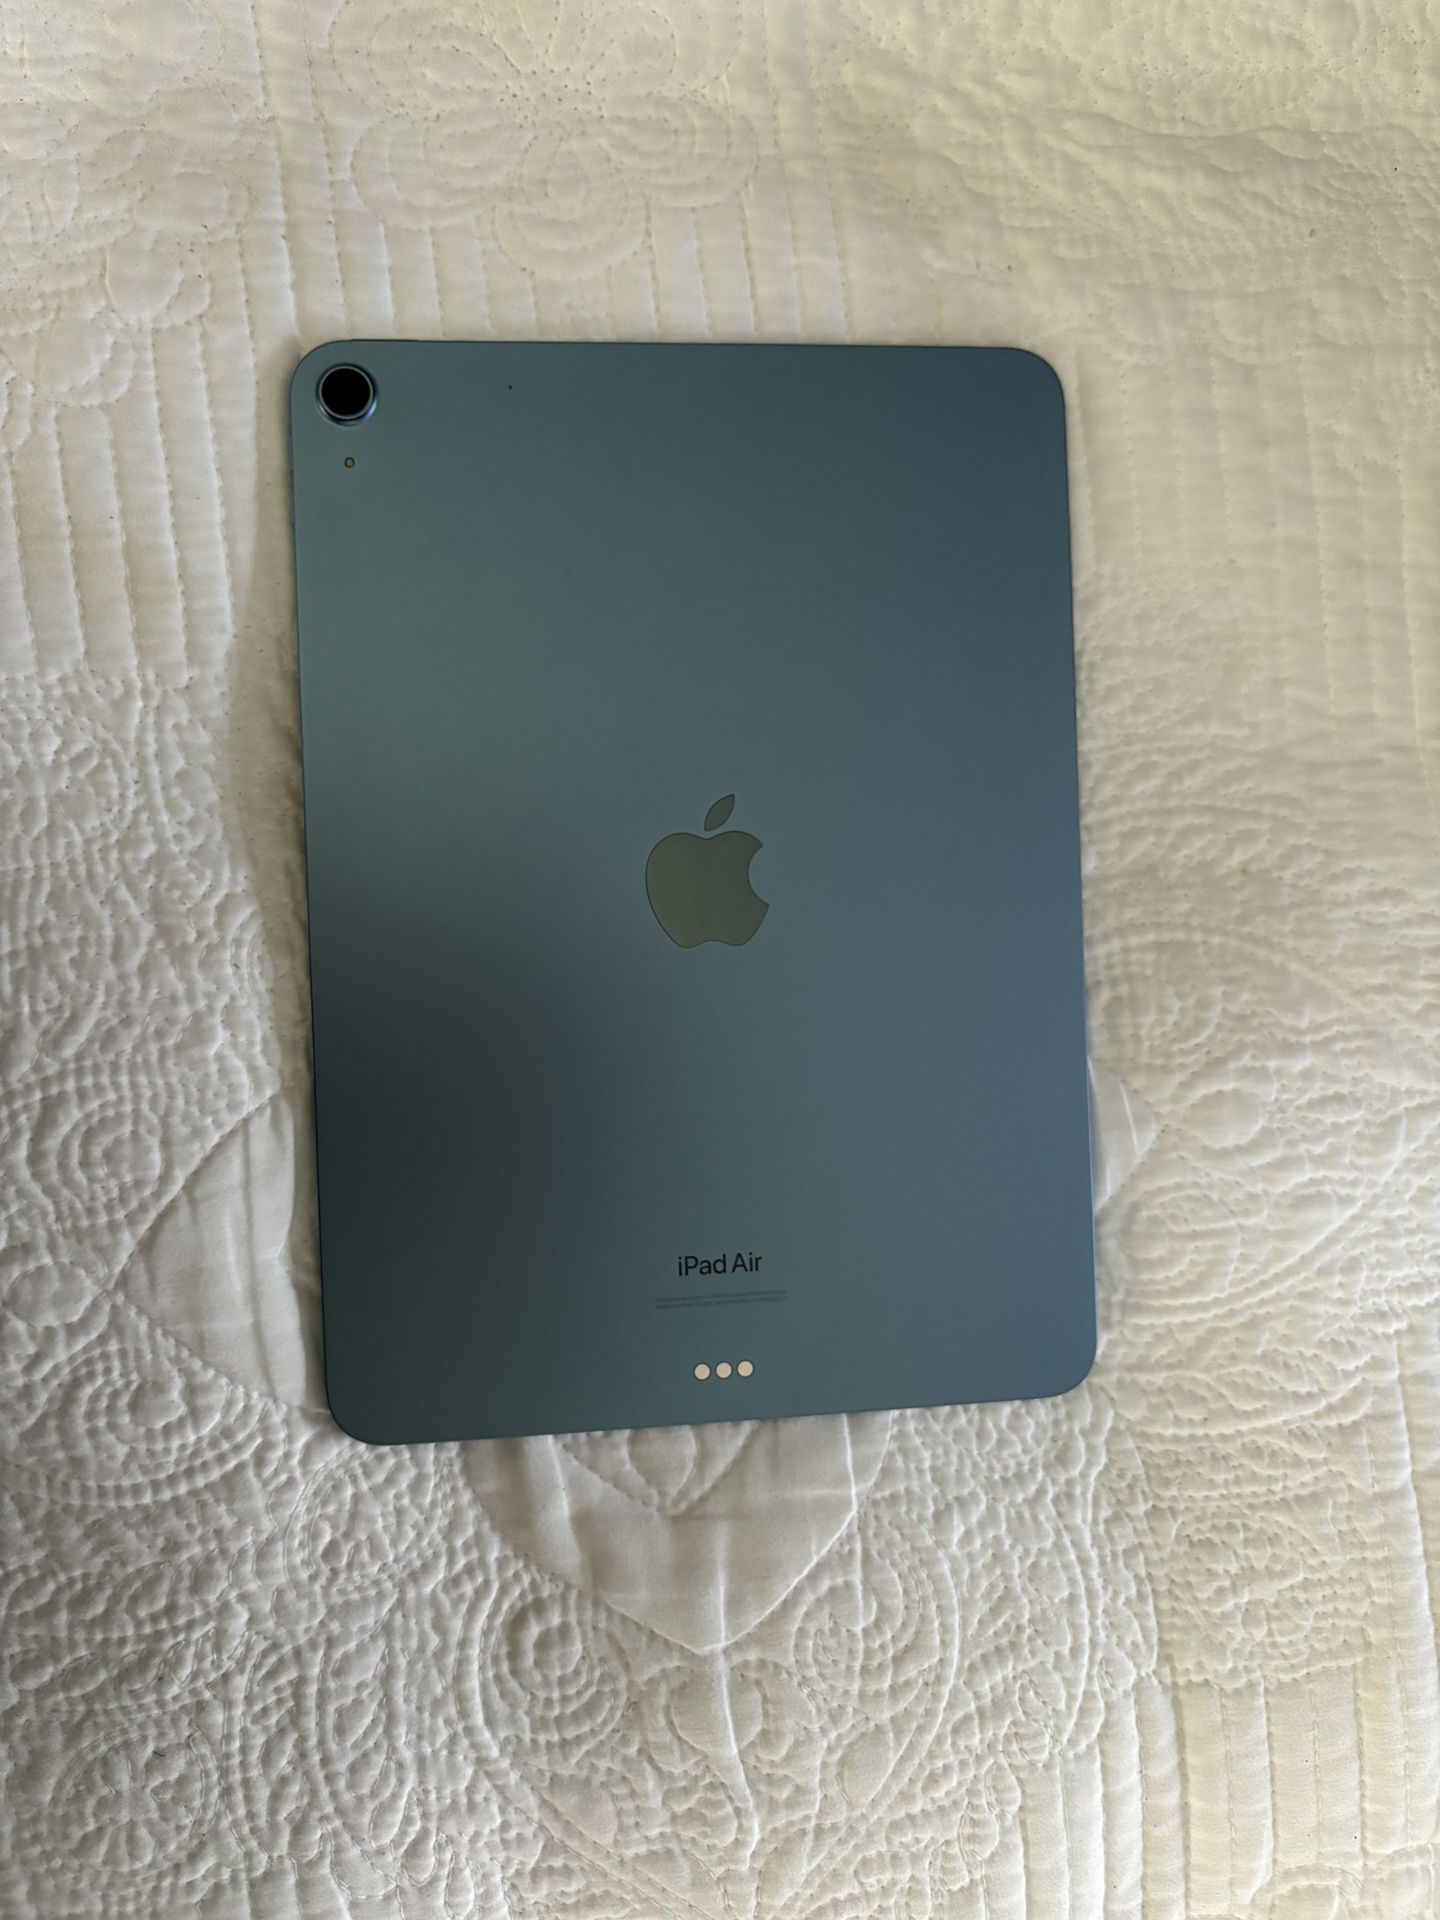 Apple - 10.9-Inch iPad Air - Latest Model - (5th Generation) with Wi-Fi - 64GB - Blue